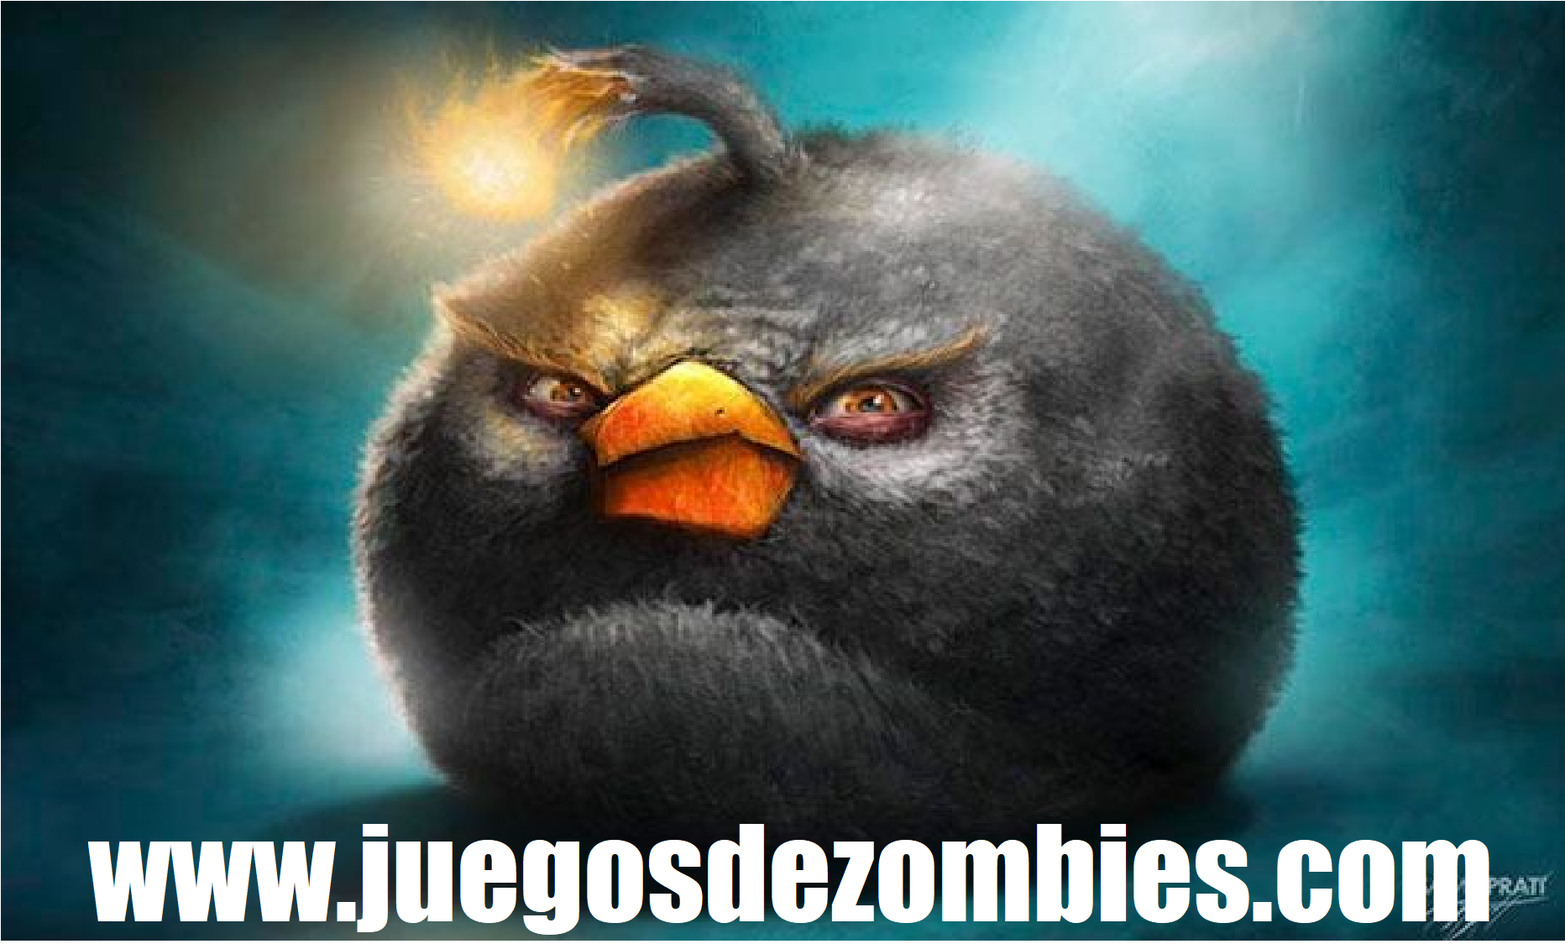 www.juegosdezombies.com - meme